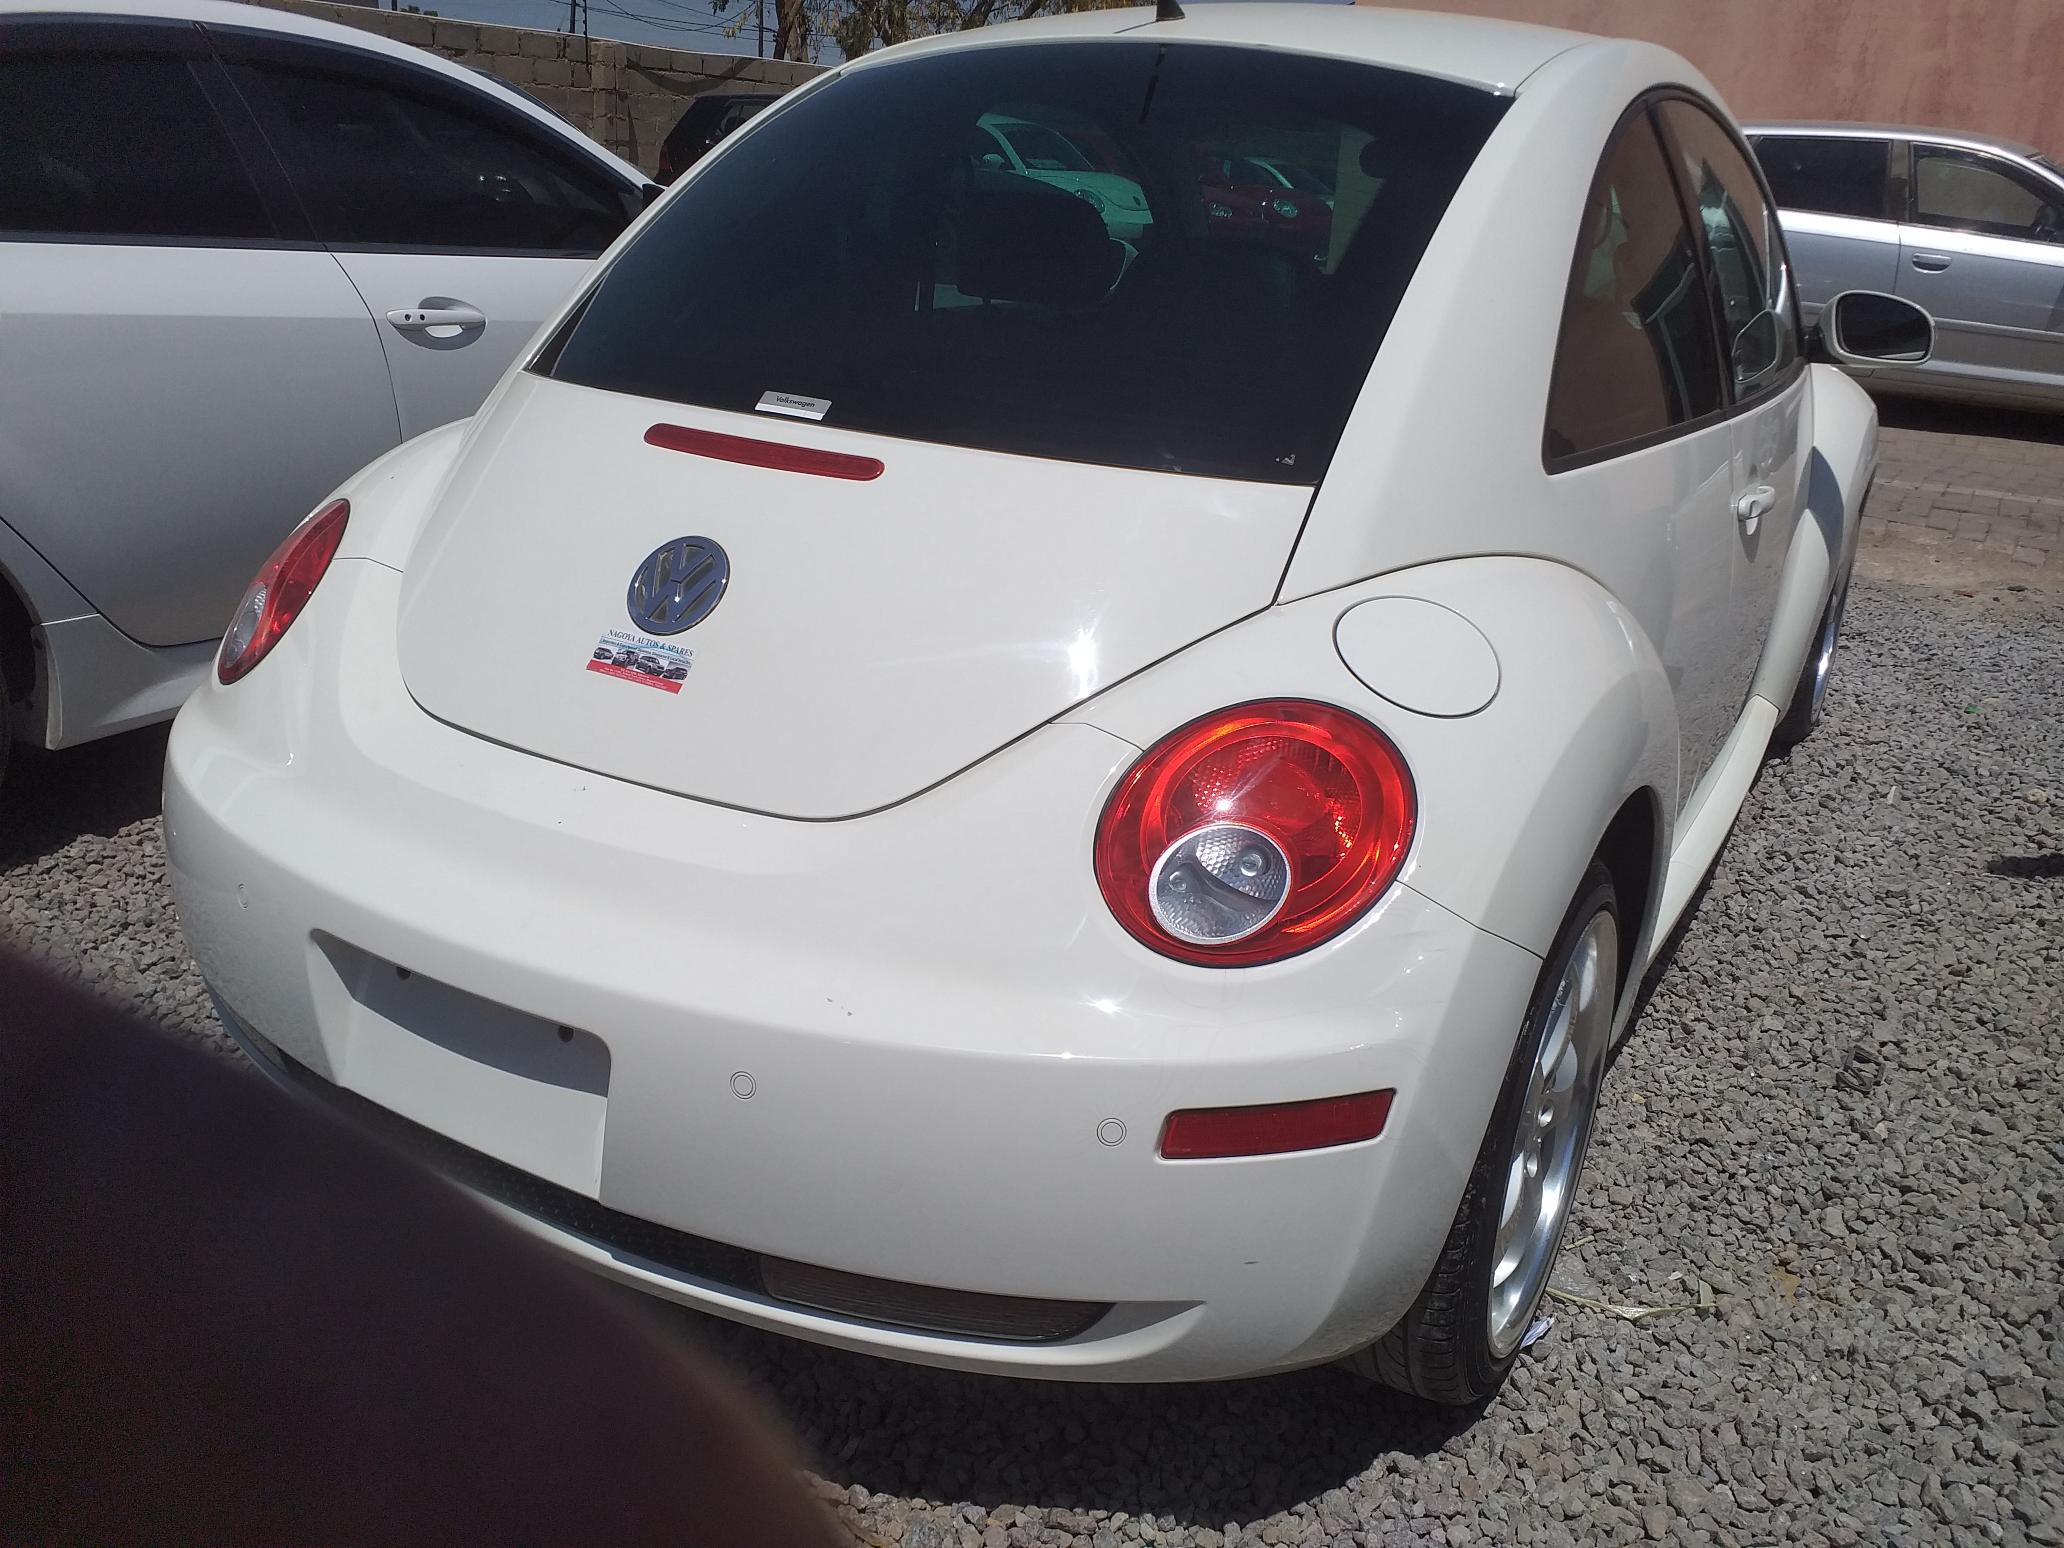 Beetle in Botswana - Local Used Volkswagen for sale in Gaborone - Buy ...